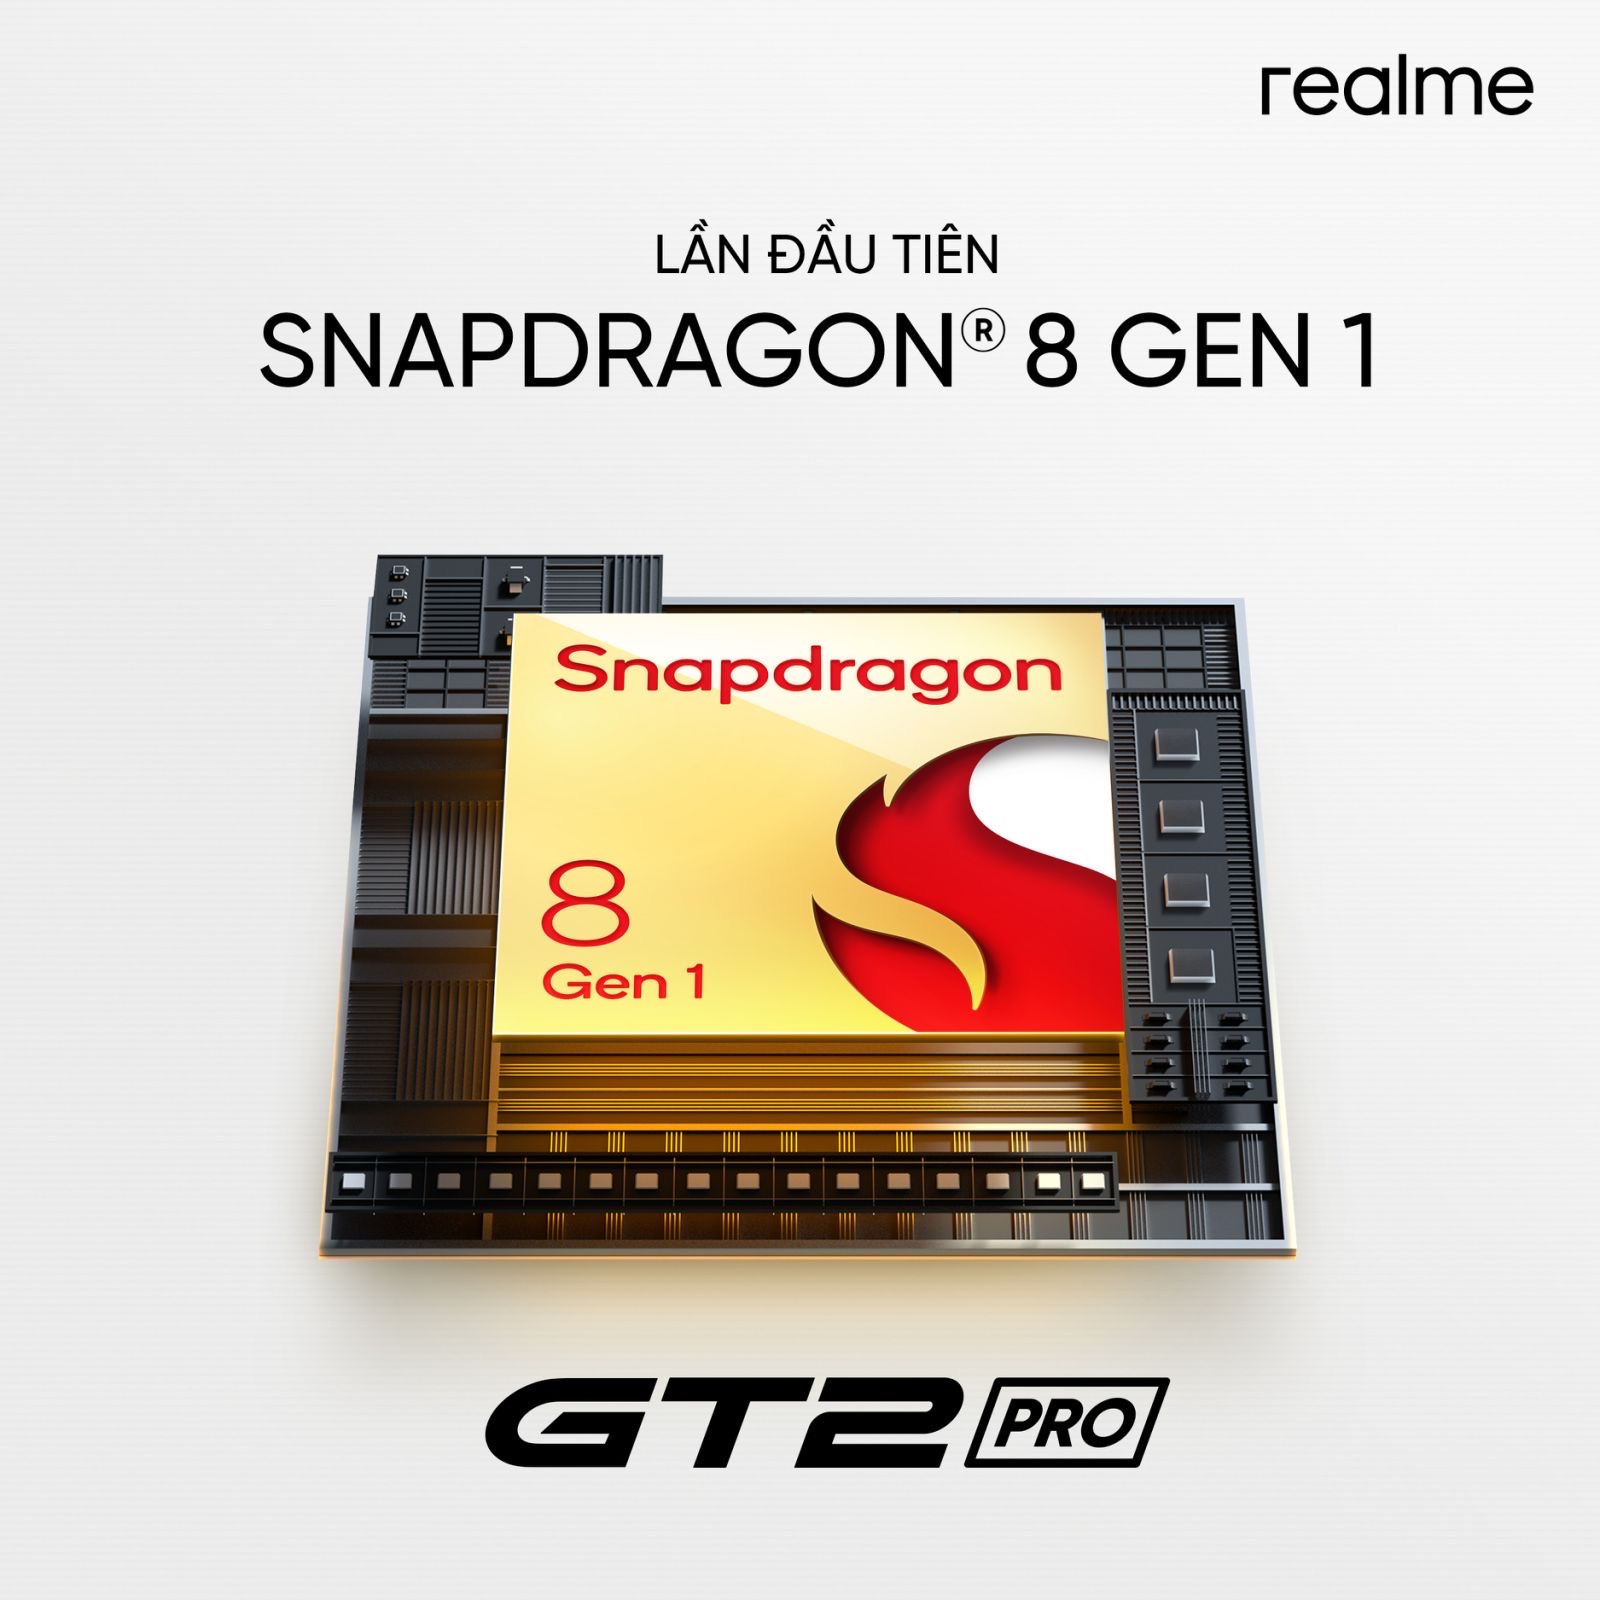 Smartphone cao cấp của realme sẽ tích hợp chip Snapdragon 8 Gen 1 - Ảnh 1.